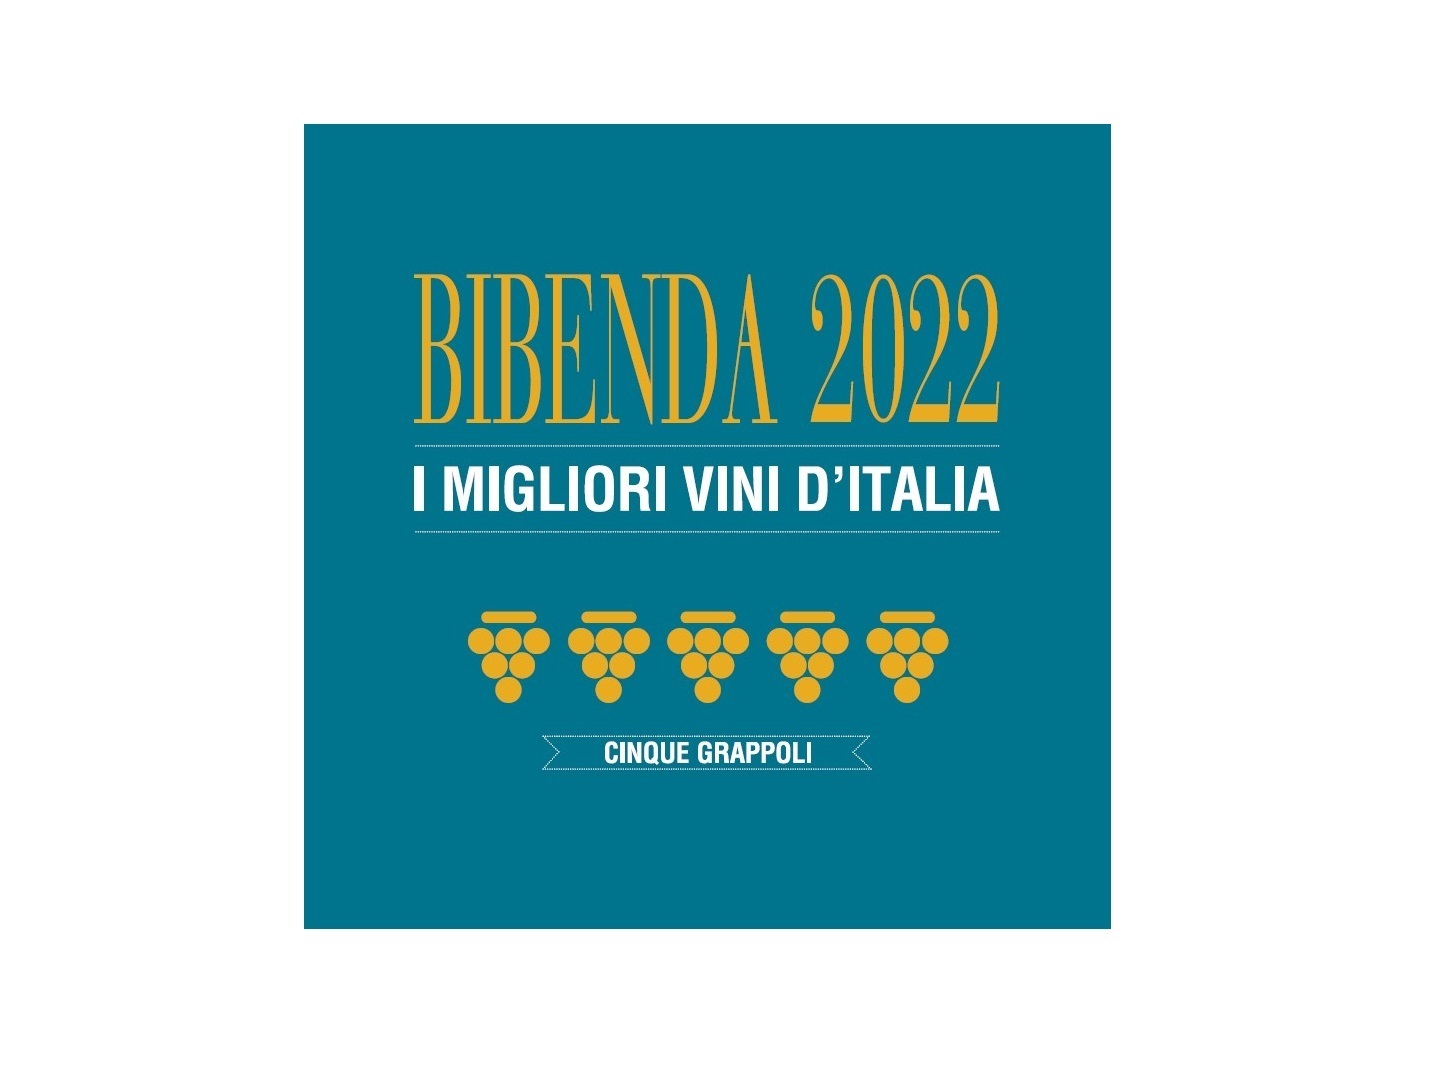 Bibenda 2022 – I migliori vini d’Italia